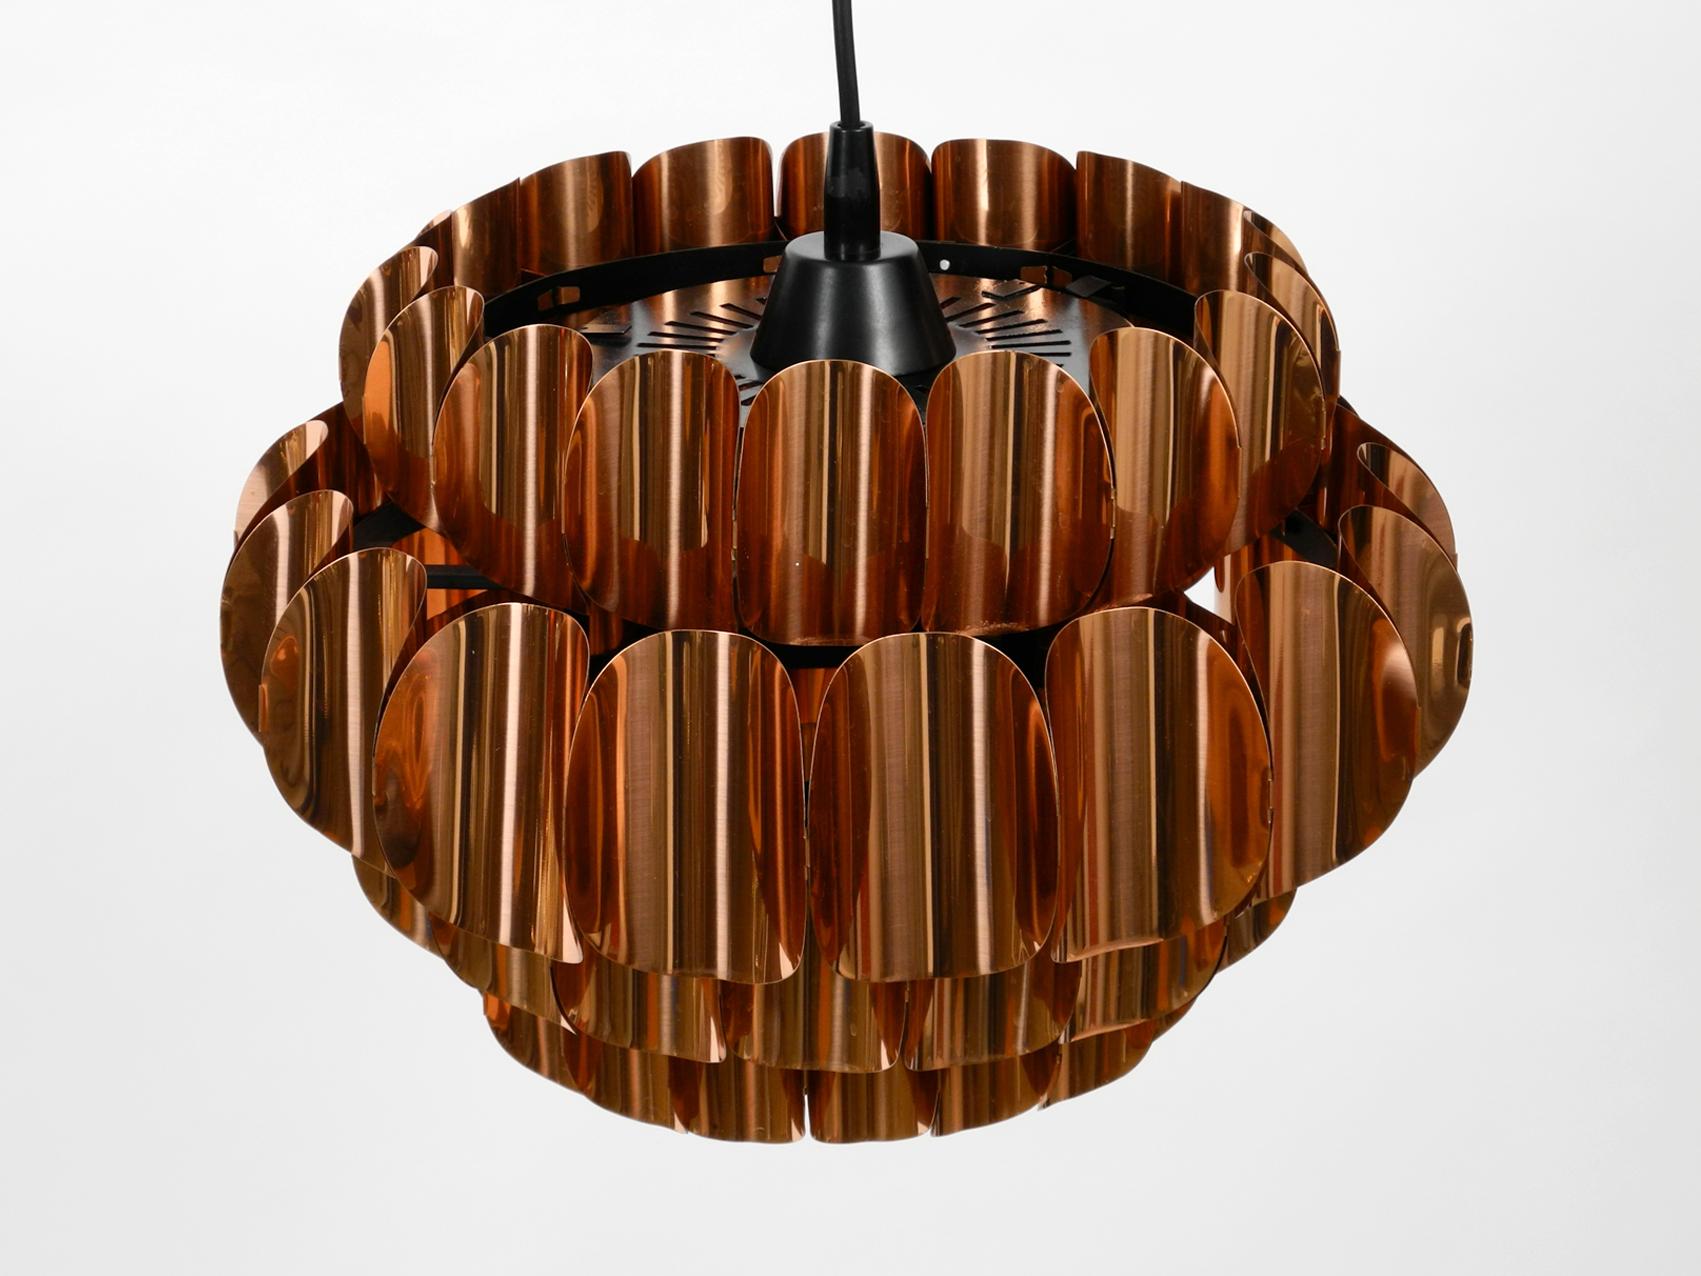 Swiss Very Elegant Large 1970s Original Temde Slats Pendant Lamp Made of Copper